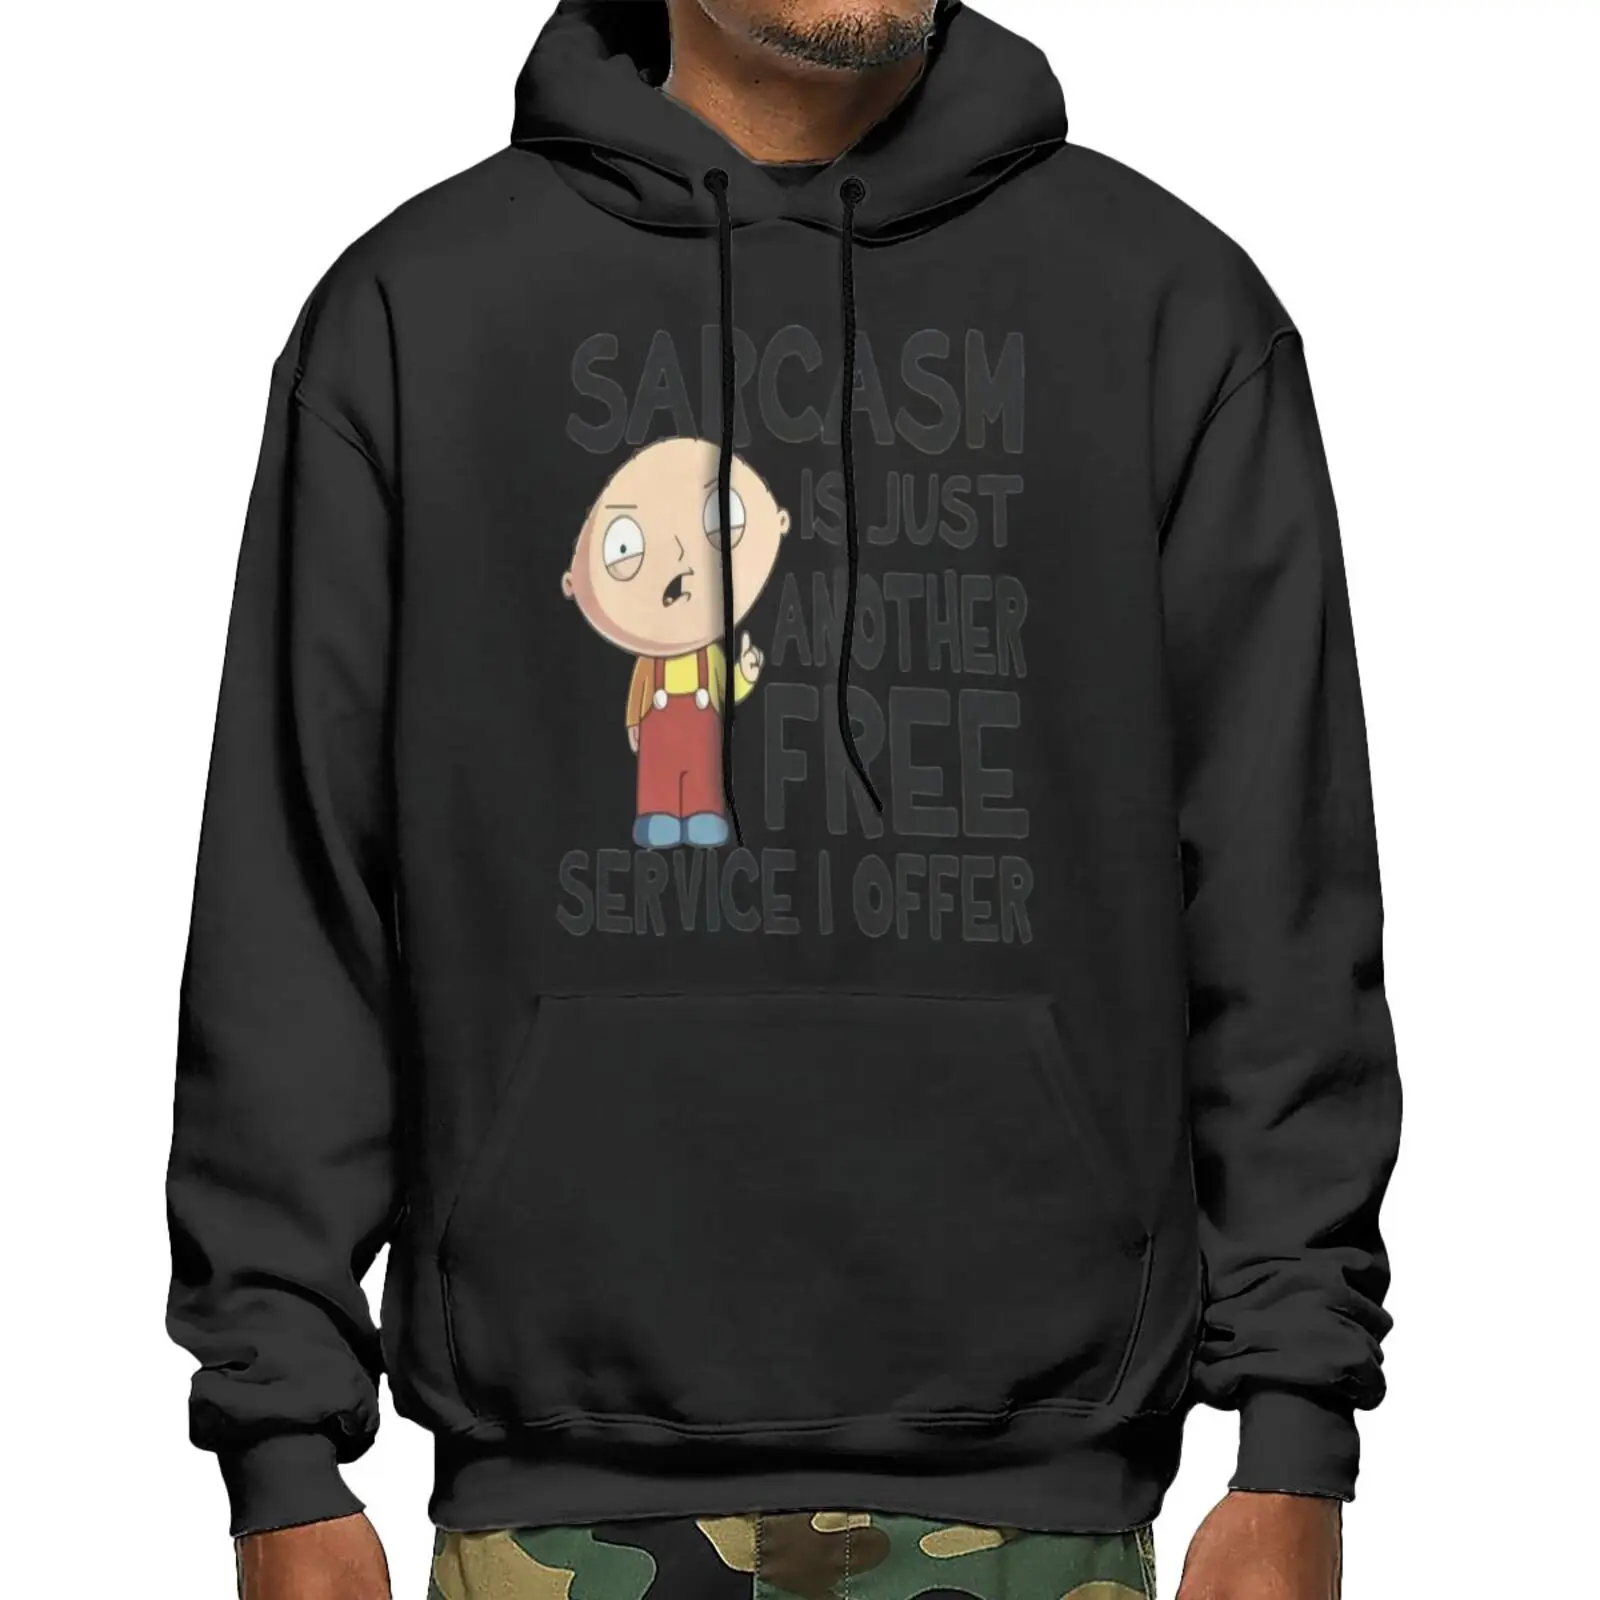 

Guy Stewie Griffin Sarcasm Is Just 3500 Sweatshirts Hoodies Sweats Hoodie With Zipper Sweats Anime Clothes Men's Winter Jacket